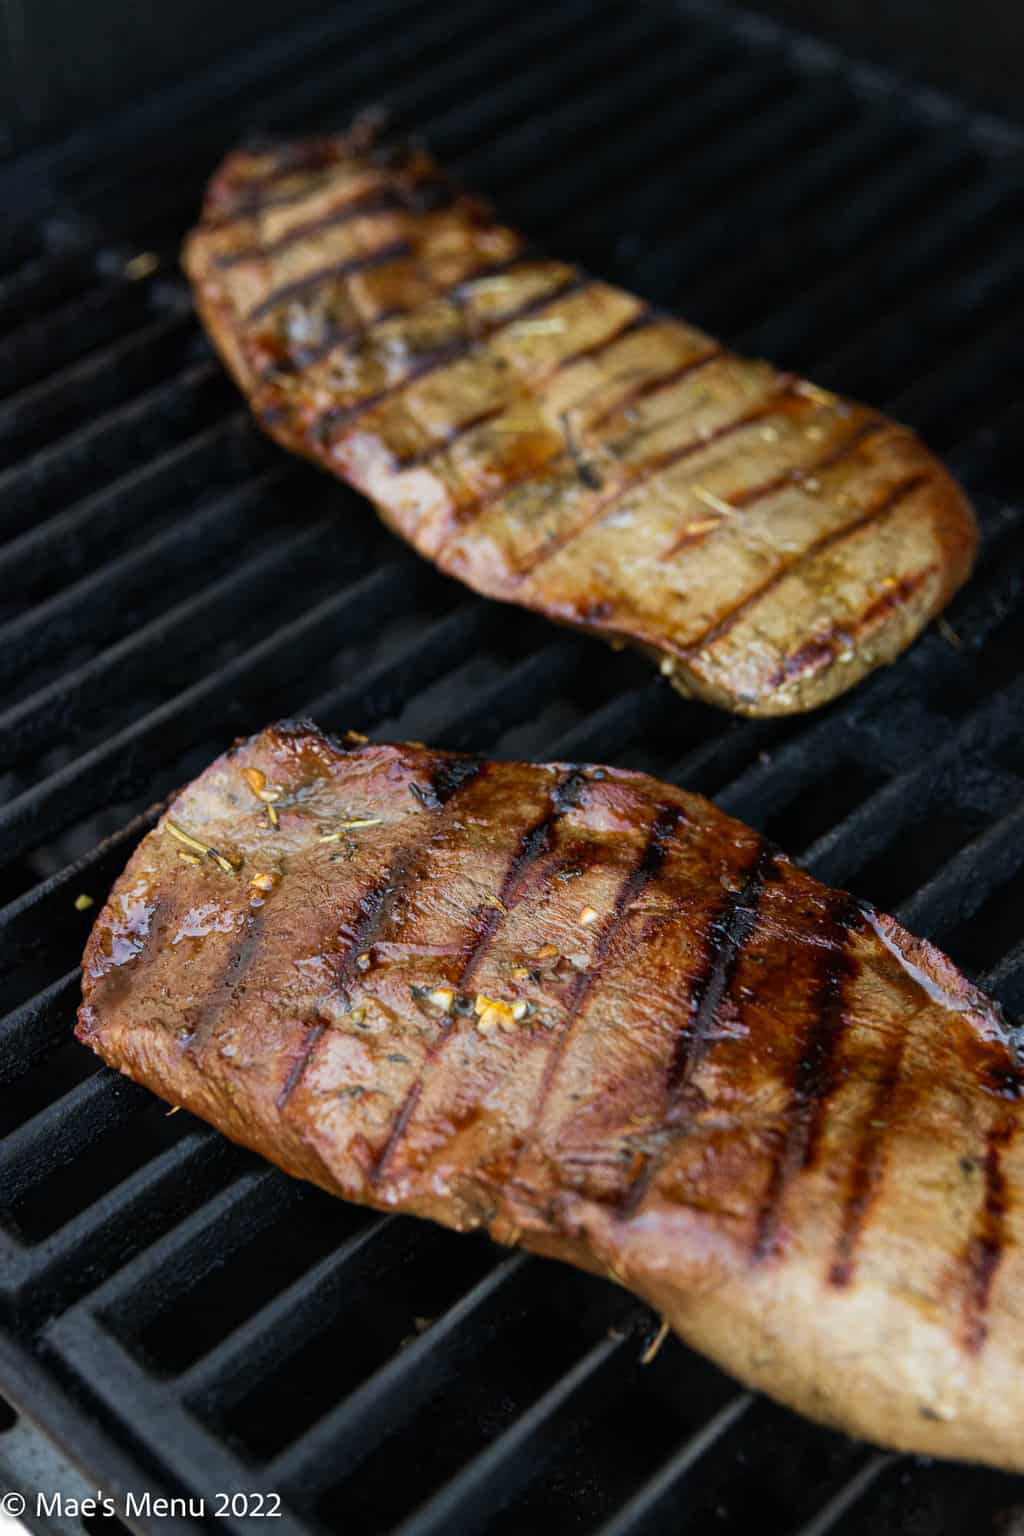 Flat iron steak on the grill grates.